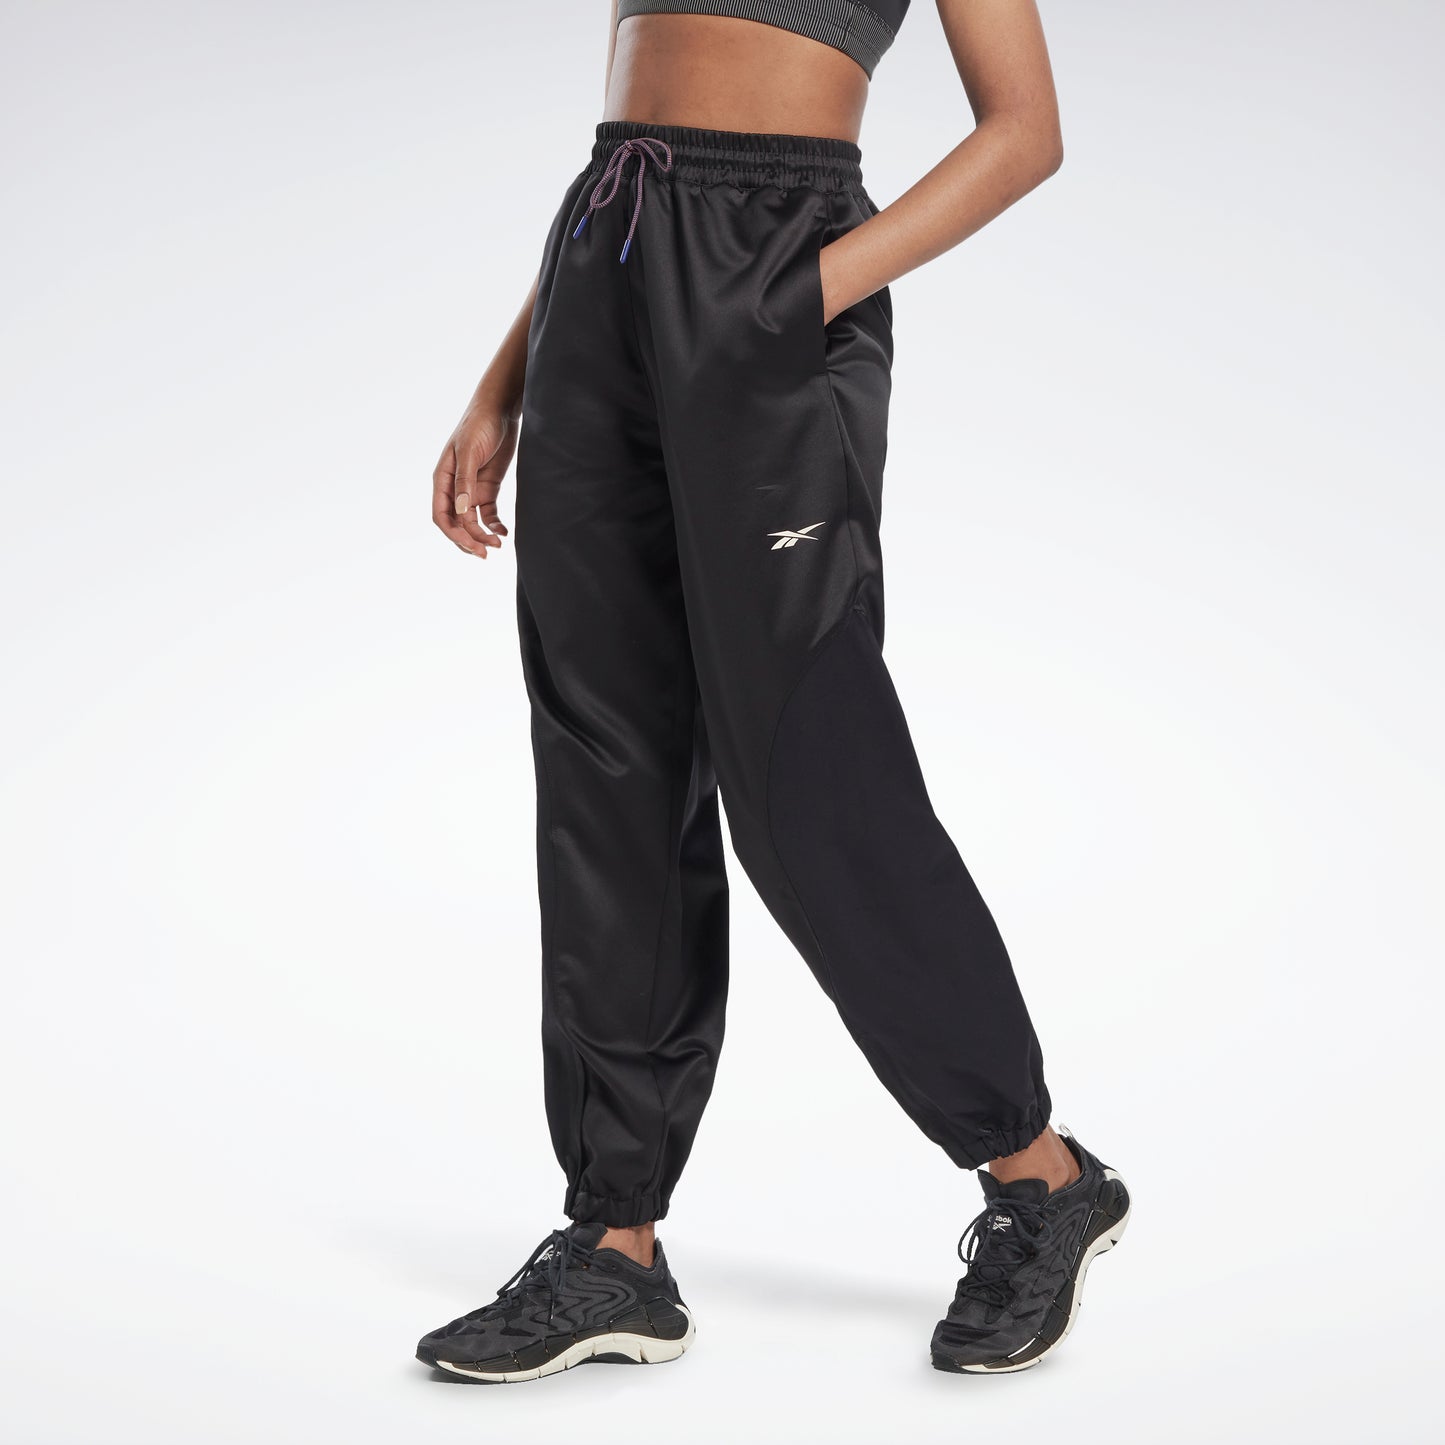 Girls' Athletic Pants, Sweatpants & Joggers in Black